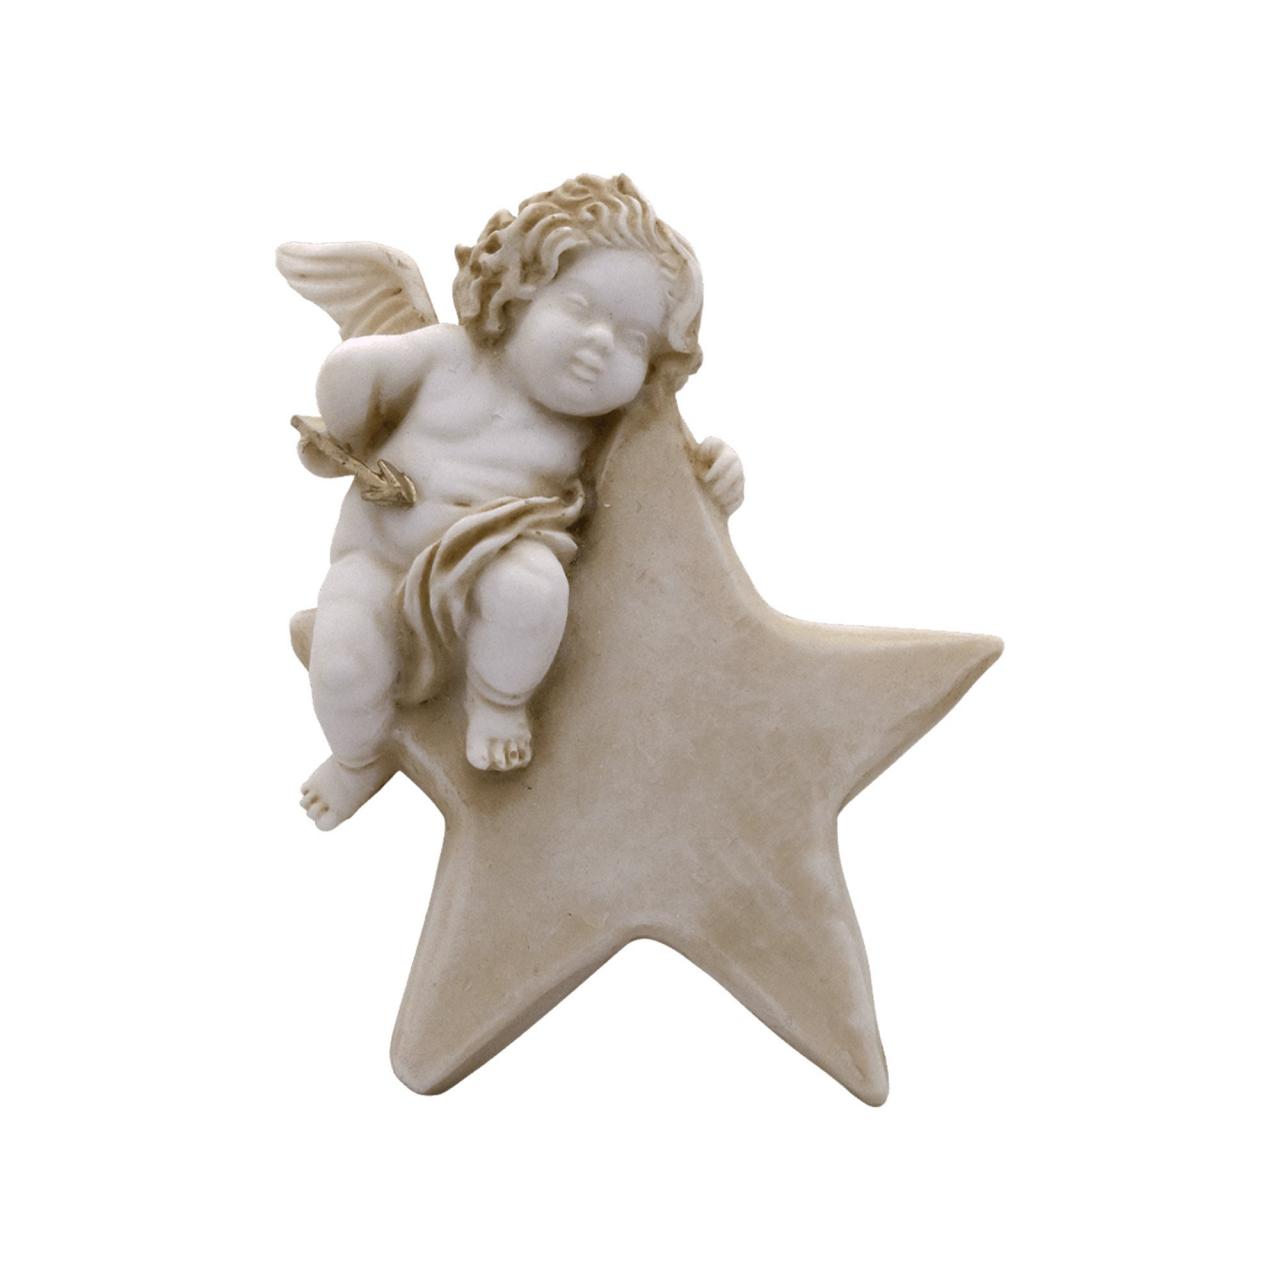 Baby Angel Sculpture Sleeping On A Star - Greek Handmade Alabaster Statue 15cm